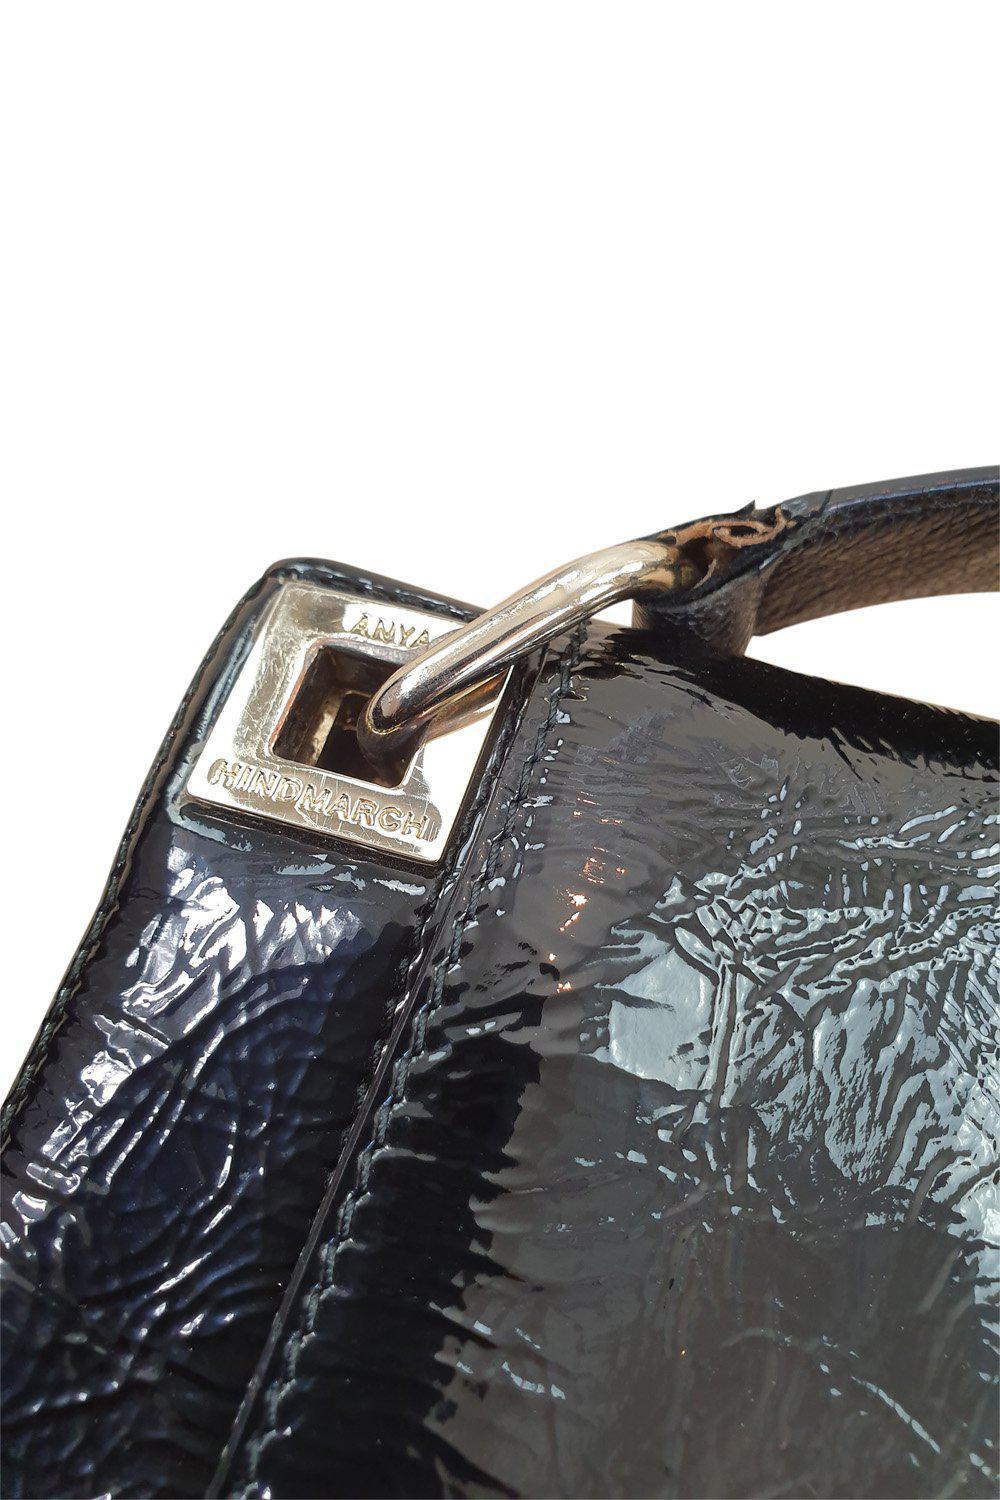 ANYA HINDMARCH Black Patent Leather Envelop Handbag (M)-Anya Hindmarch-The Freperie